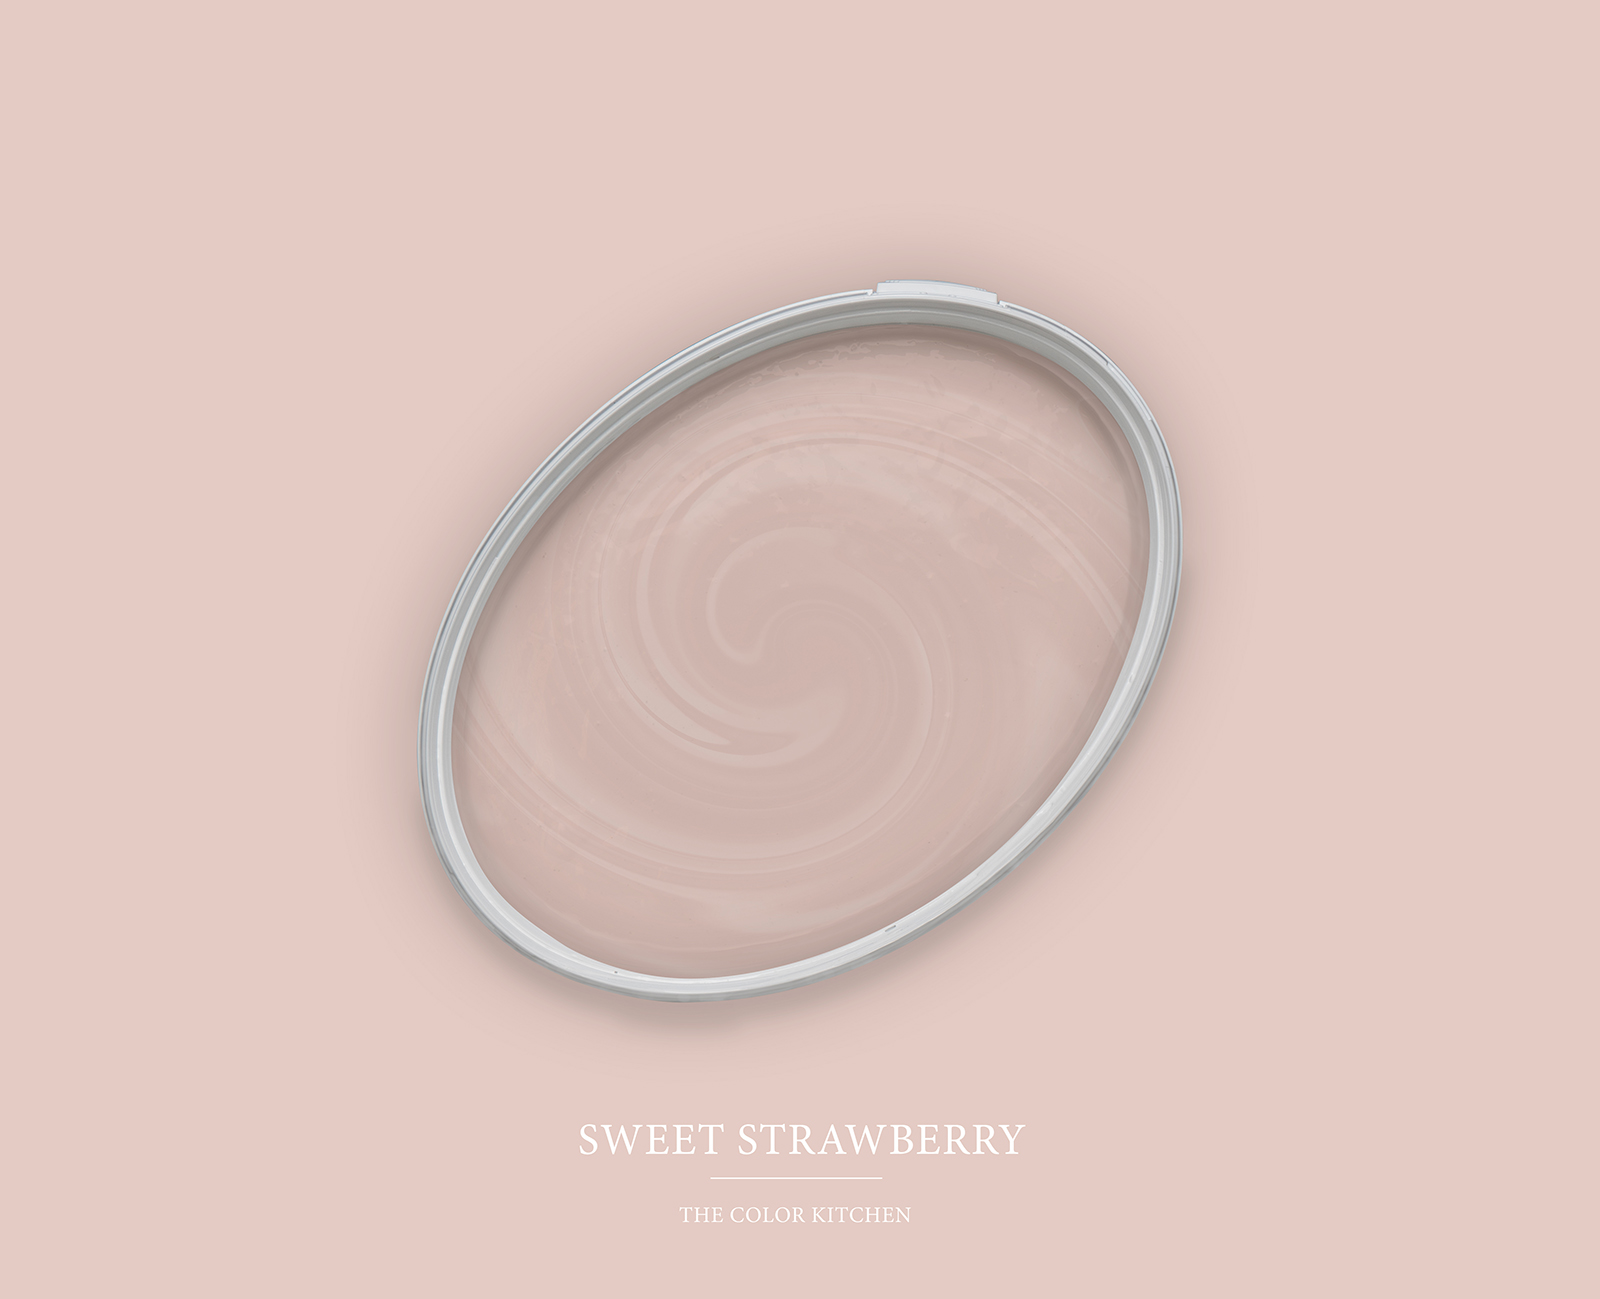 Peinture murale TCK7007 »Sweet Strawberry» un interlude de rose et de beige – 5,0 litres
